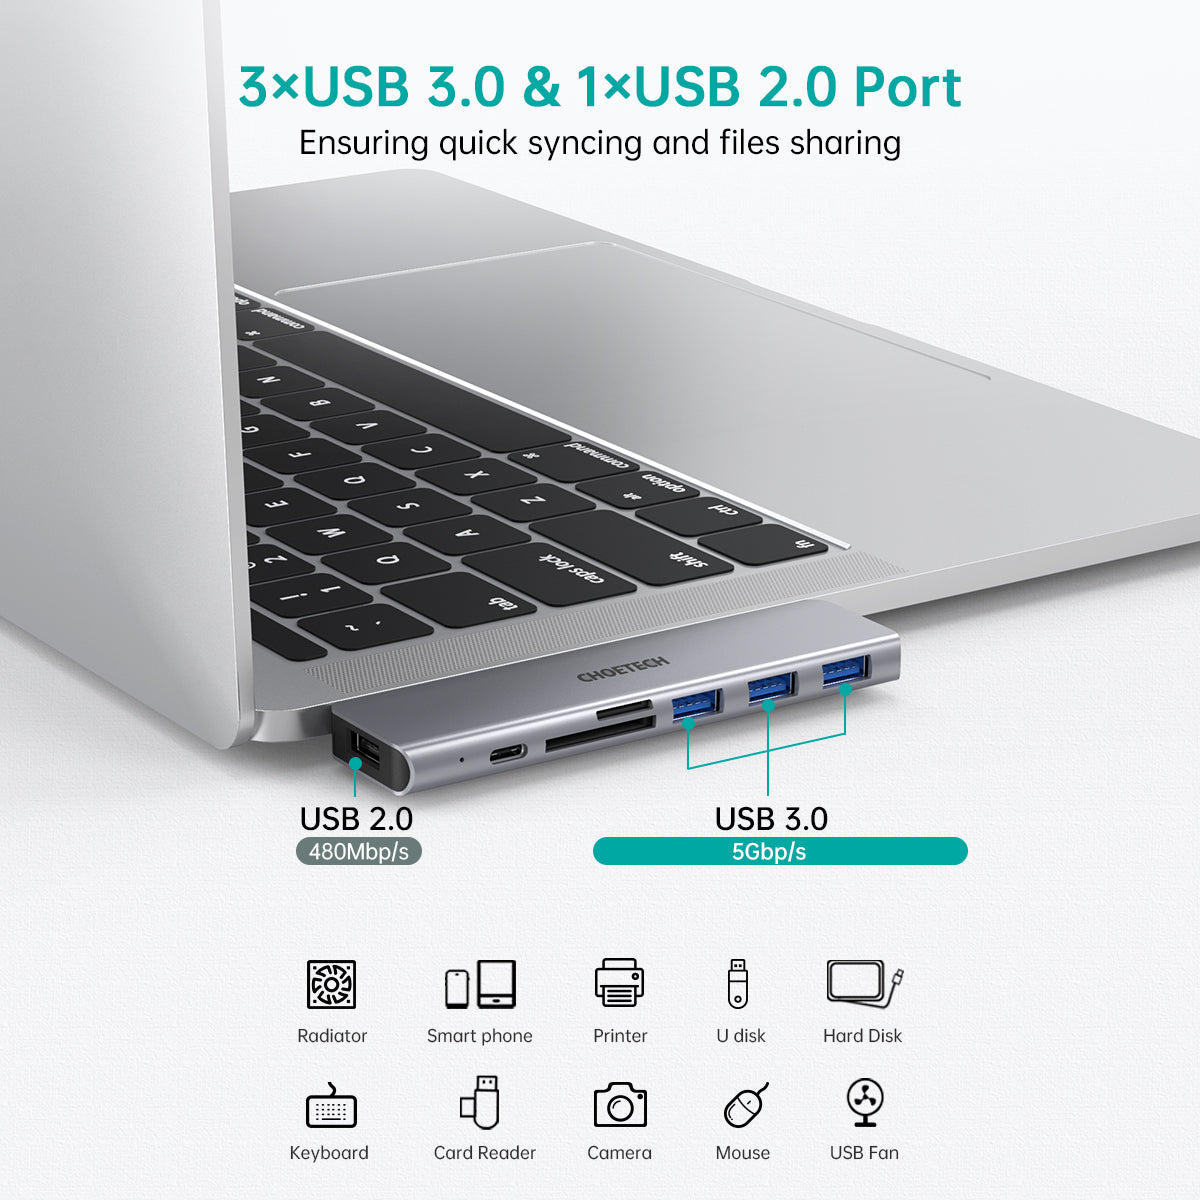 HUB-M23 Adaptador USB MacBook Pro, CHOETECH 7 en 1 Adaptador MacBook Air para MacBook Pro/Air 13-16"2016-2020, Accesorios MacBook con puerto Thunderbolt 3 100W PD, 3 puertos USB 3.0, puerto USB 2.0, tarjeta TF/SD Lector